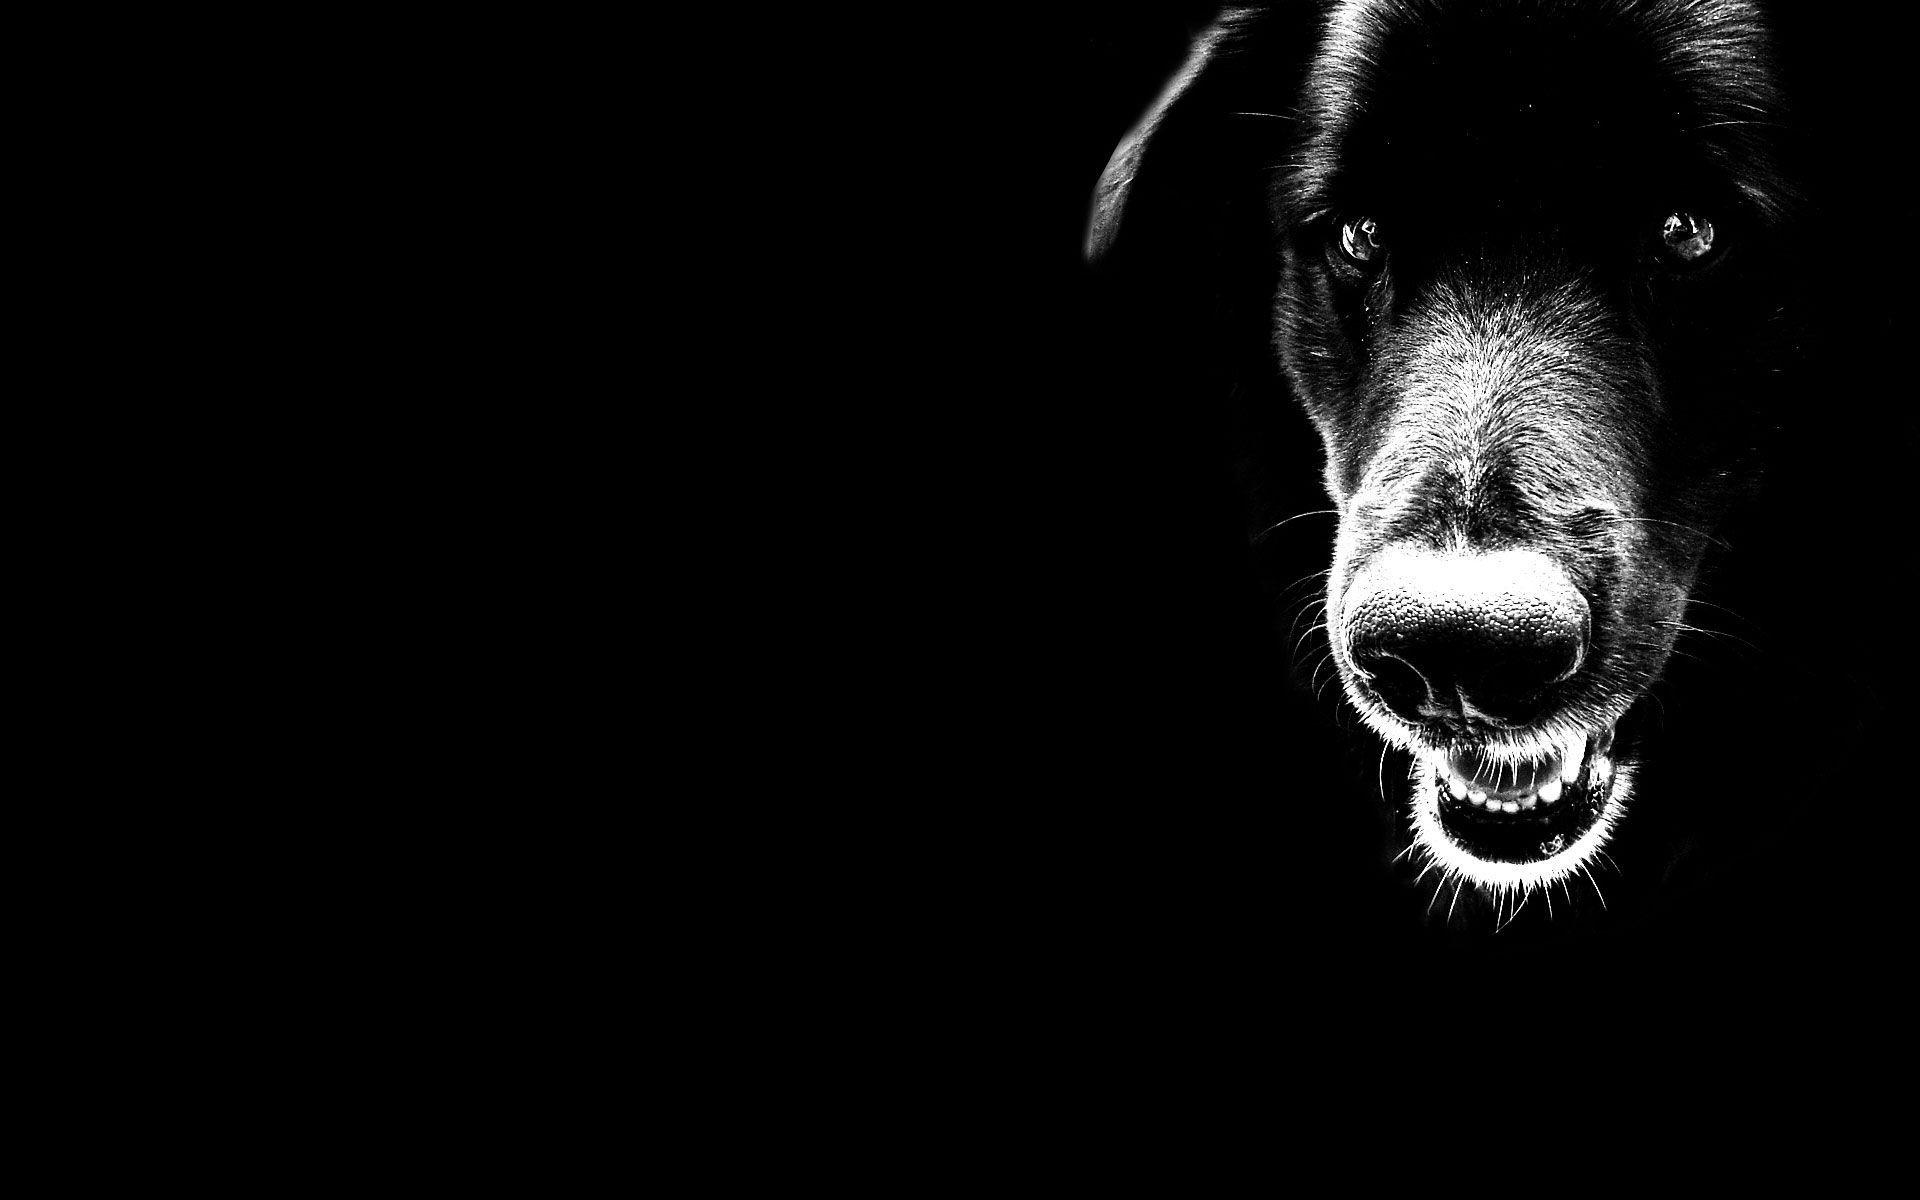 Dog Aesthetic Desktop Wallpapers - Top Free Dog Aesthetic Desktop